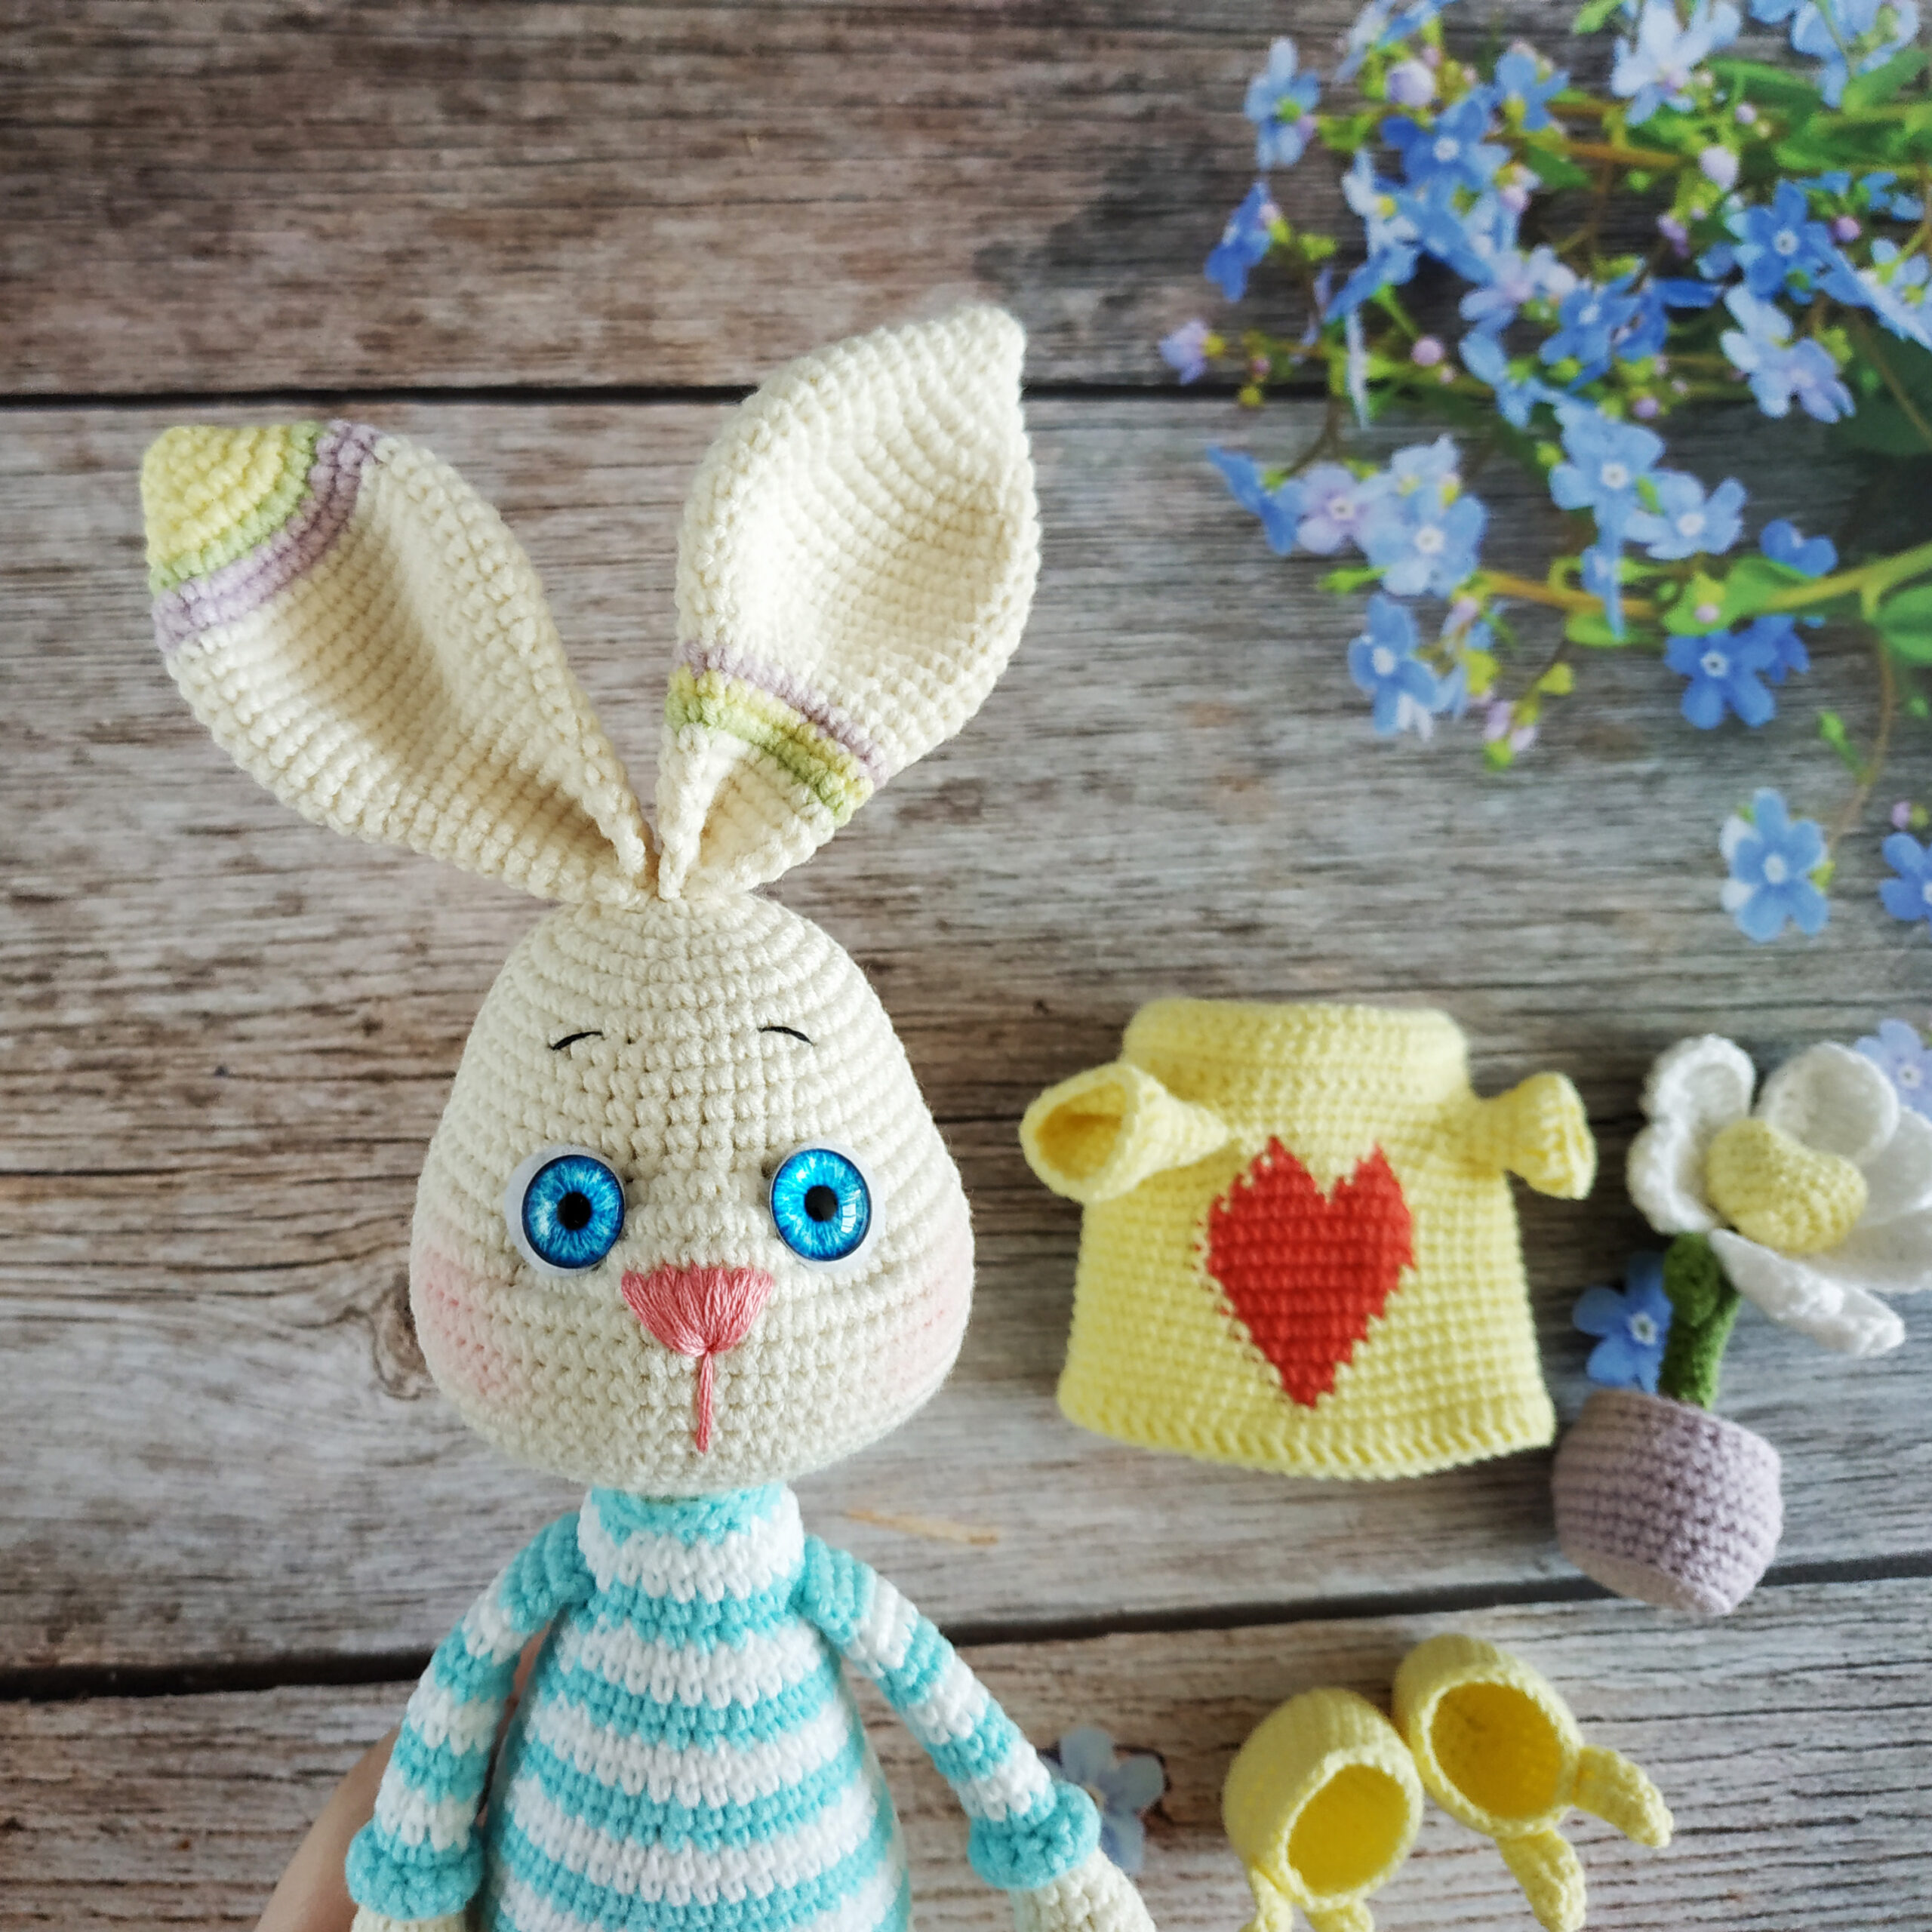 Amigurumi cuties pattern, Crochet bunny, puppy and teddy